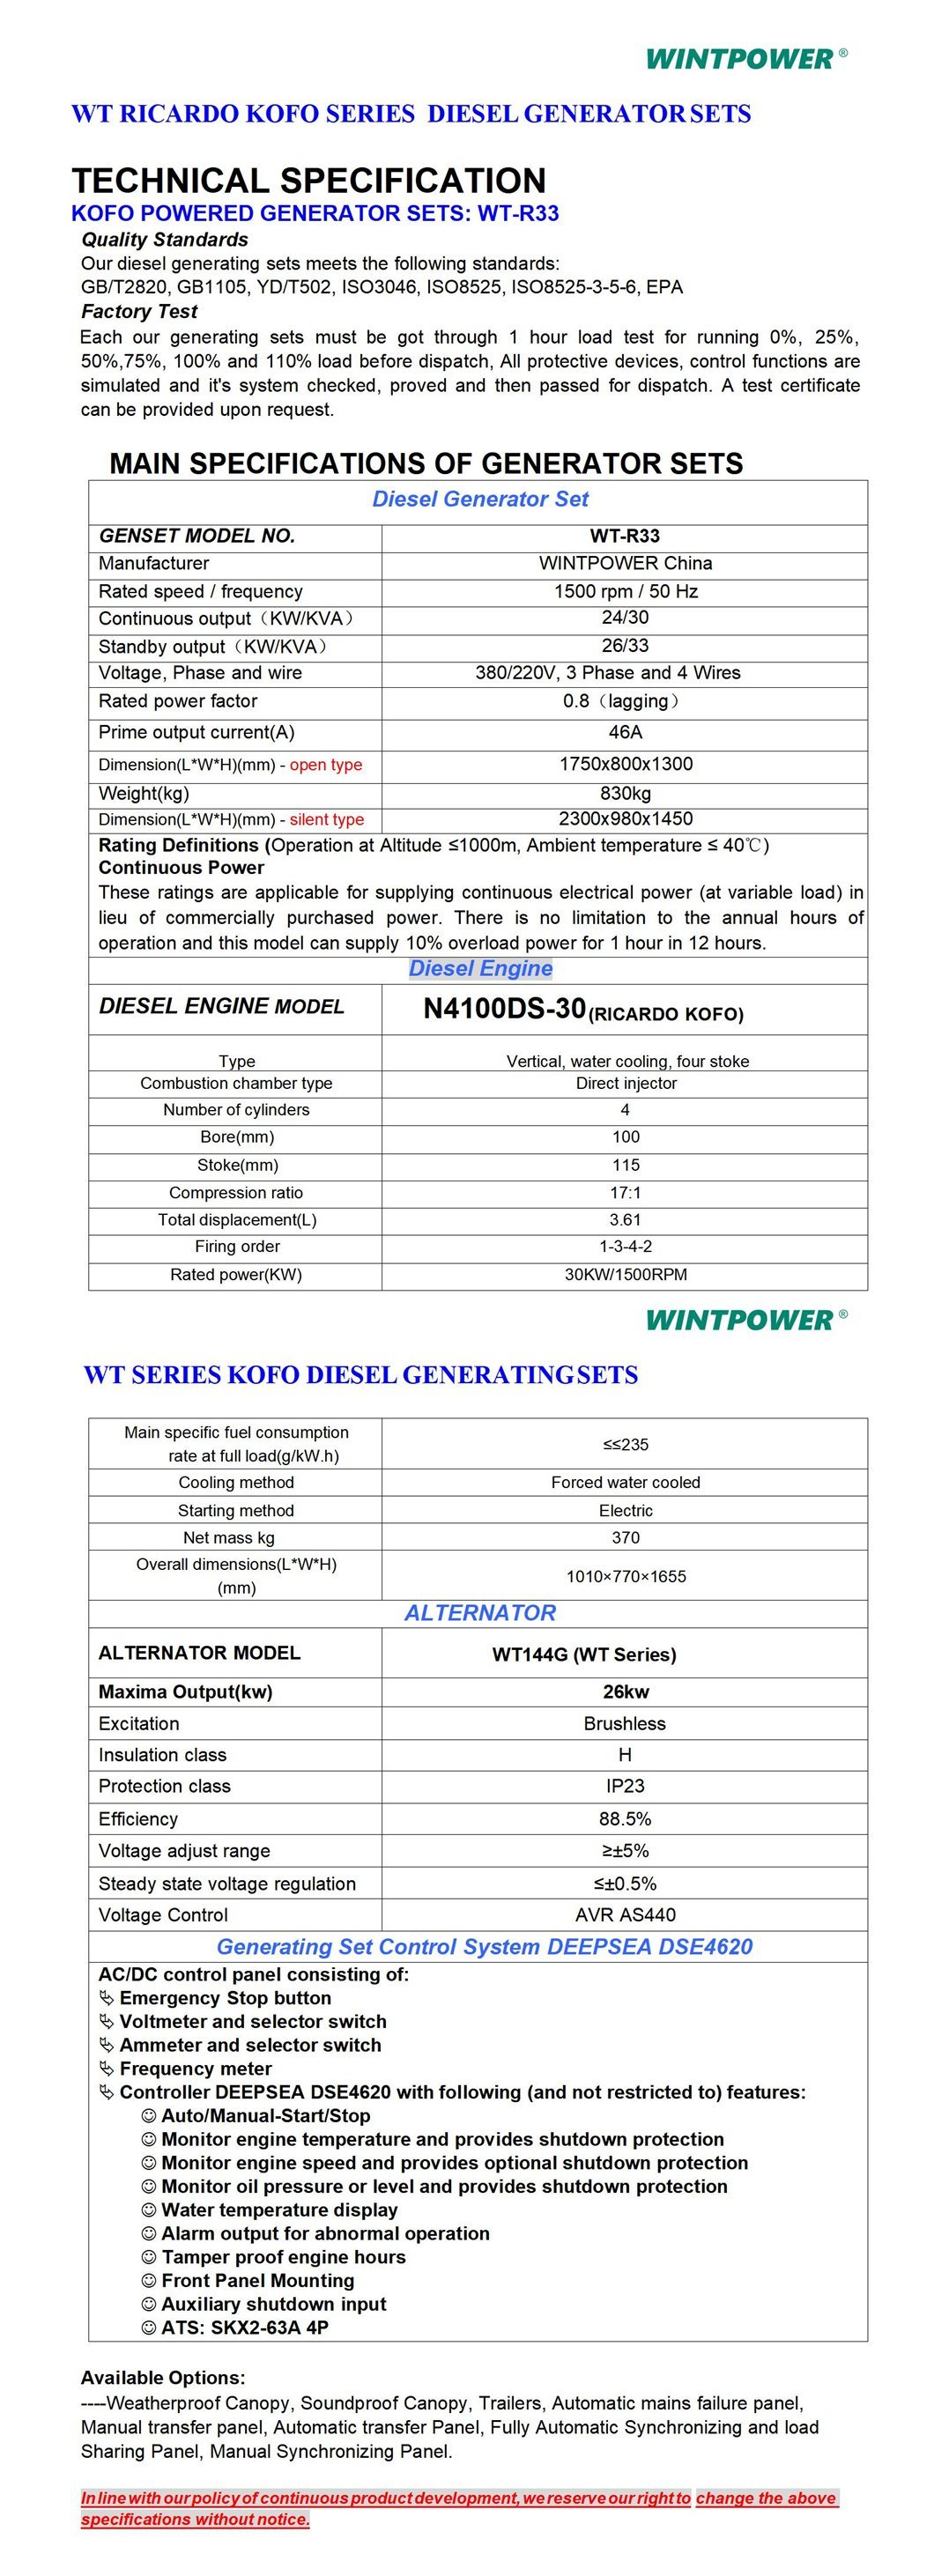 Weichai Kofo Ricardo Diesel Power Generator Set Dg Genset 100kVA 4rt55-88d R6105zlds 110kVA 4rt55-110d 120kVA R6105azlds 138kVA R6105bzlds 165kVA R6110zlds 206